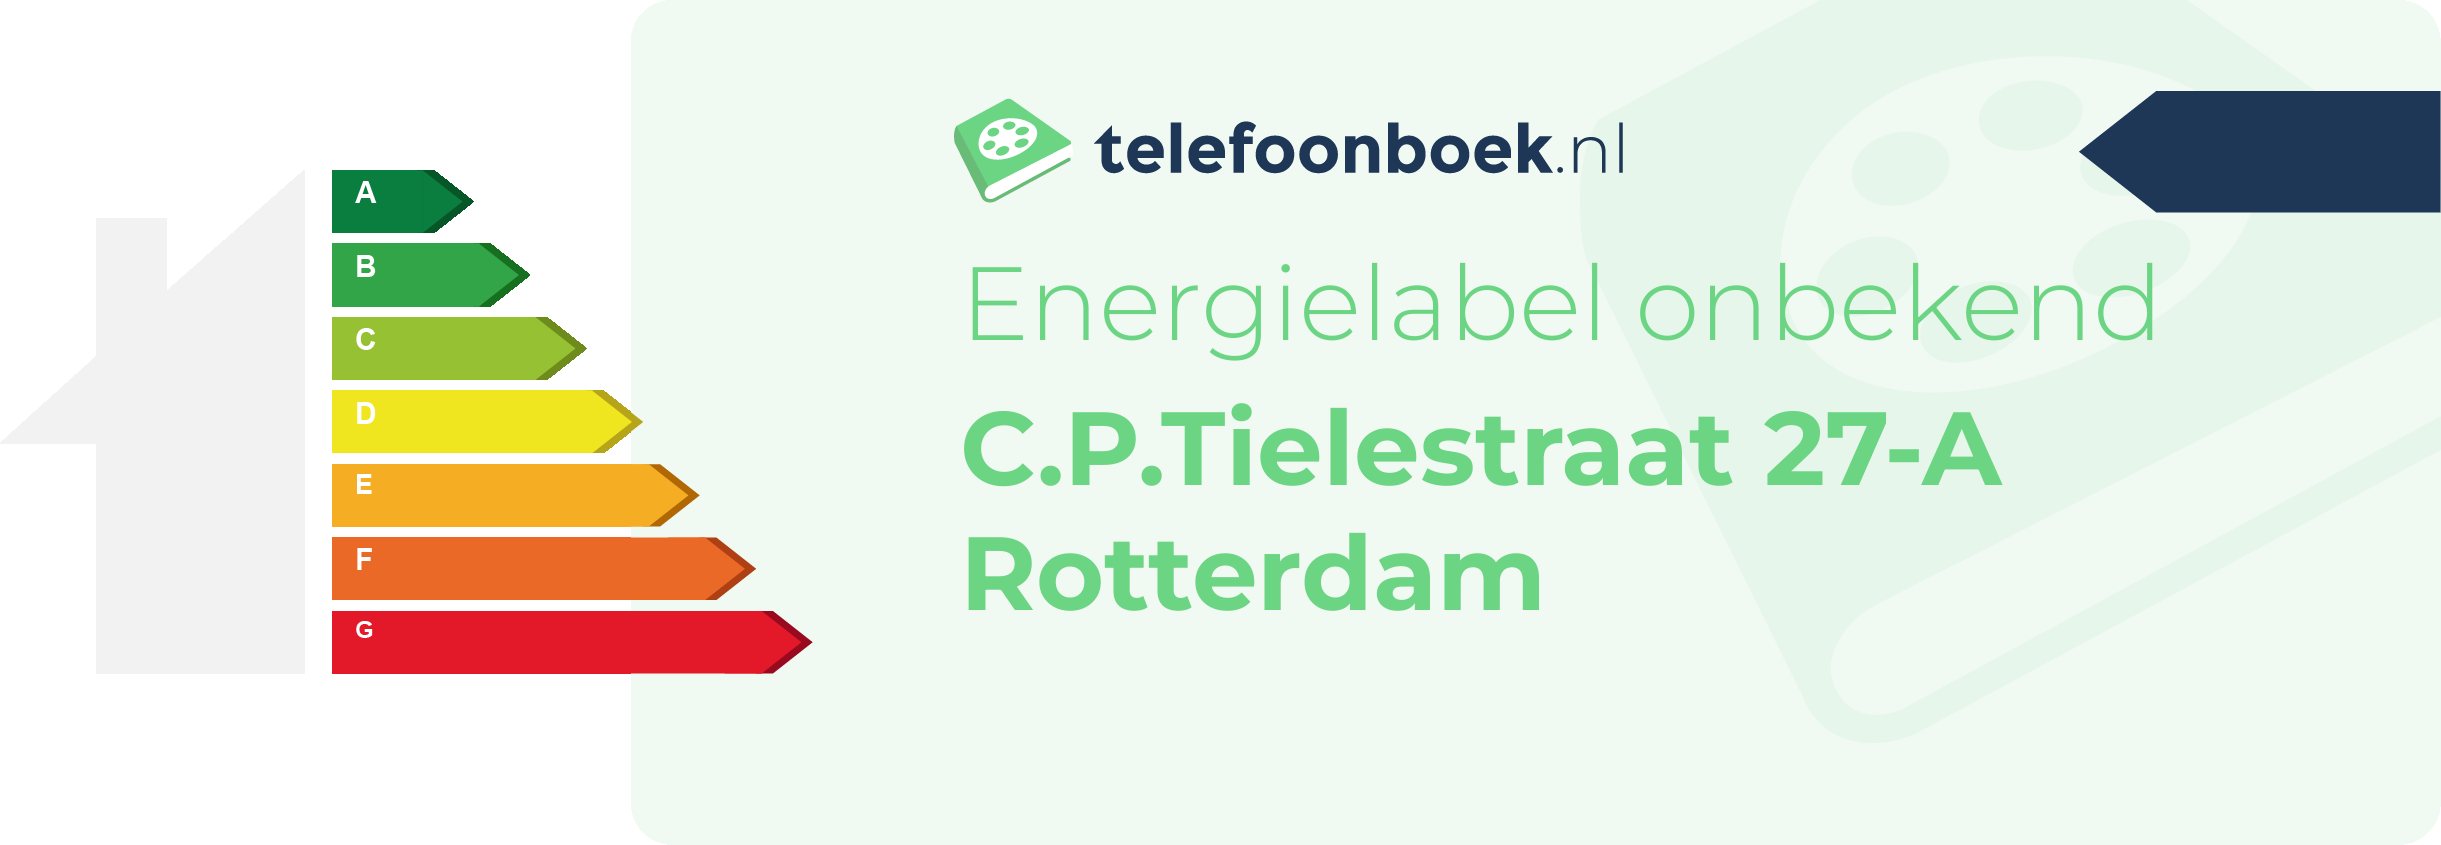 Energielabel C.P.Tielestraat 27-A Rotterdam